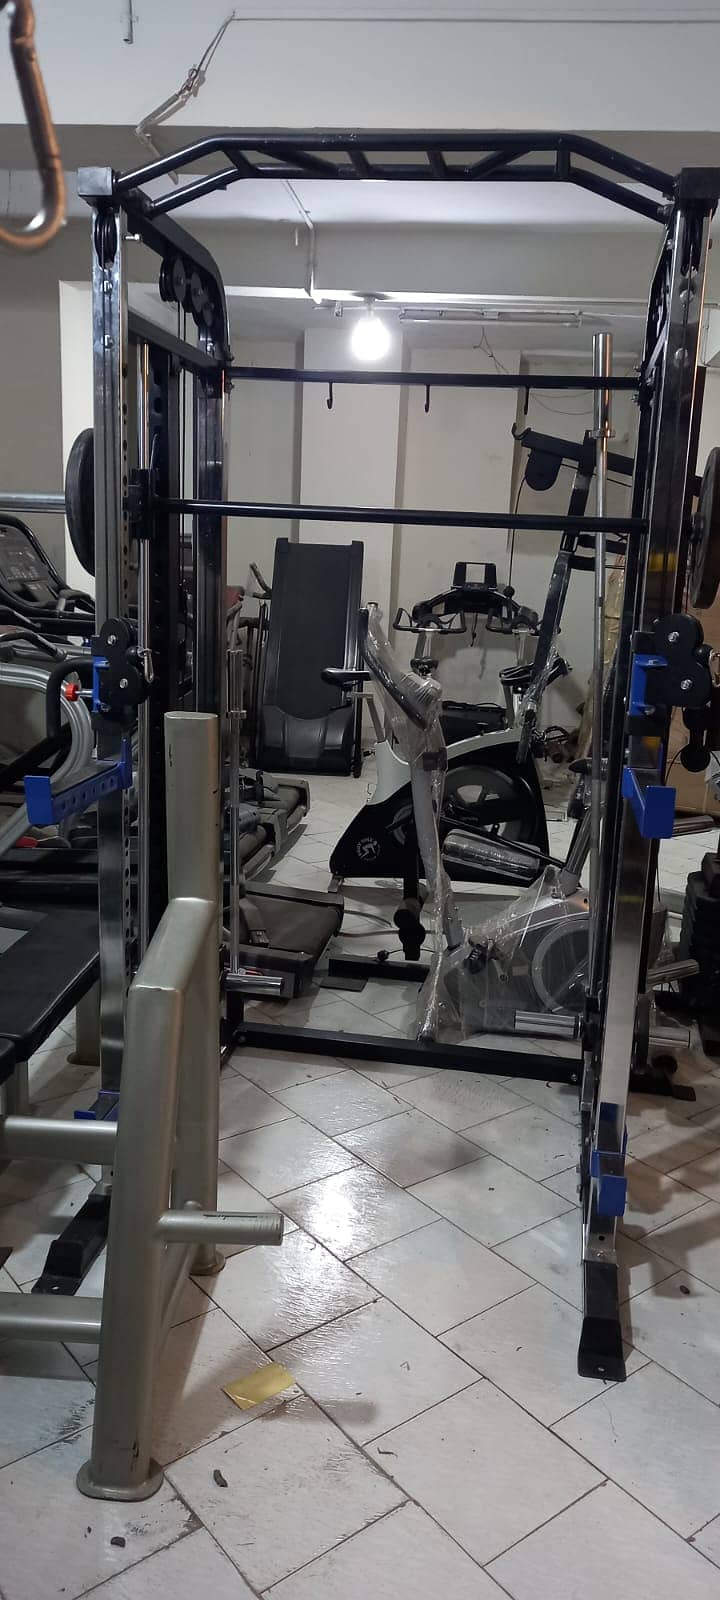 gym setup dumbel |commercial treadmill | elliptical | bench plate rods 9